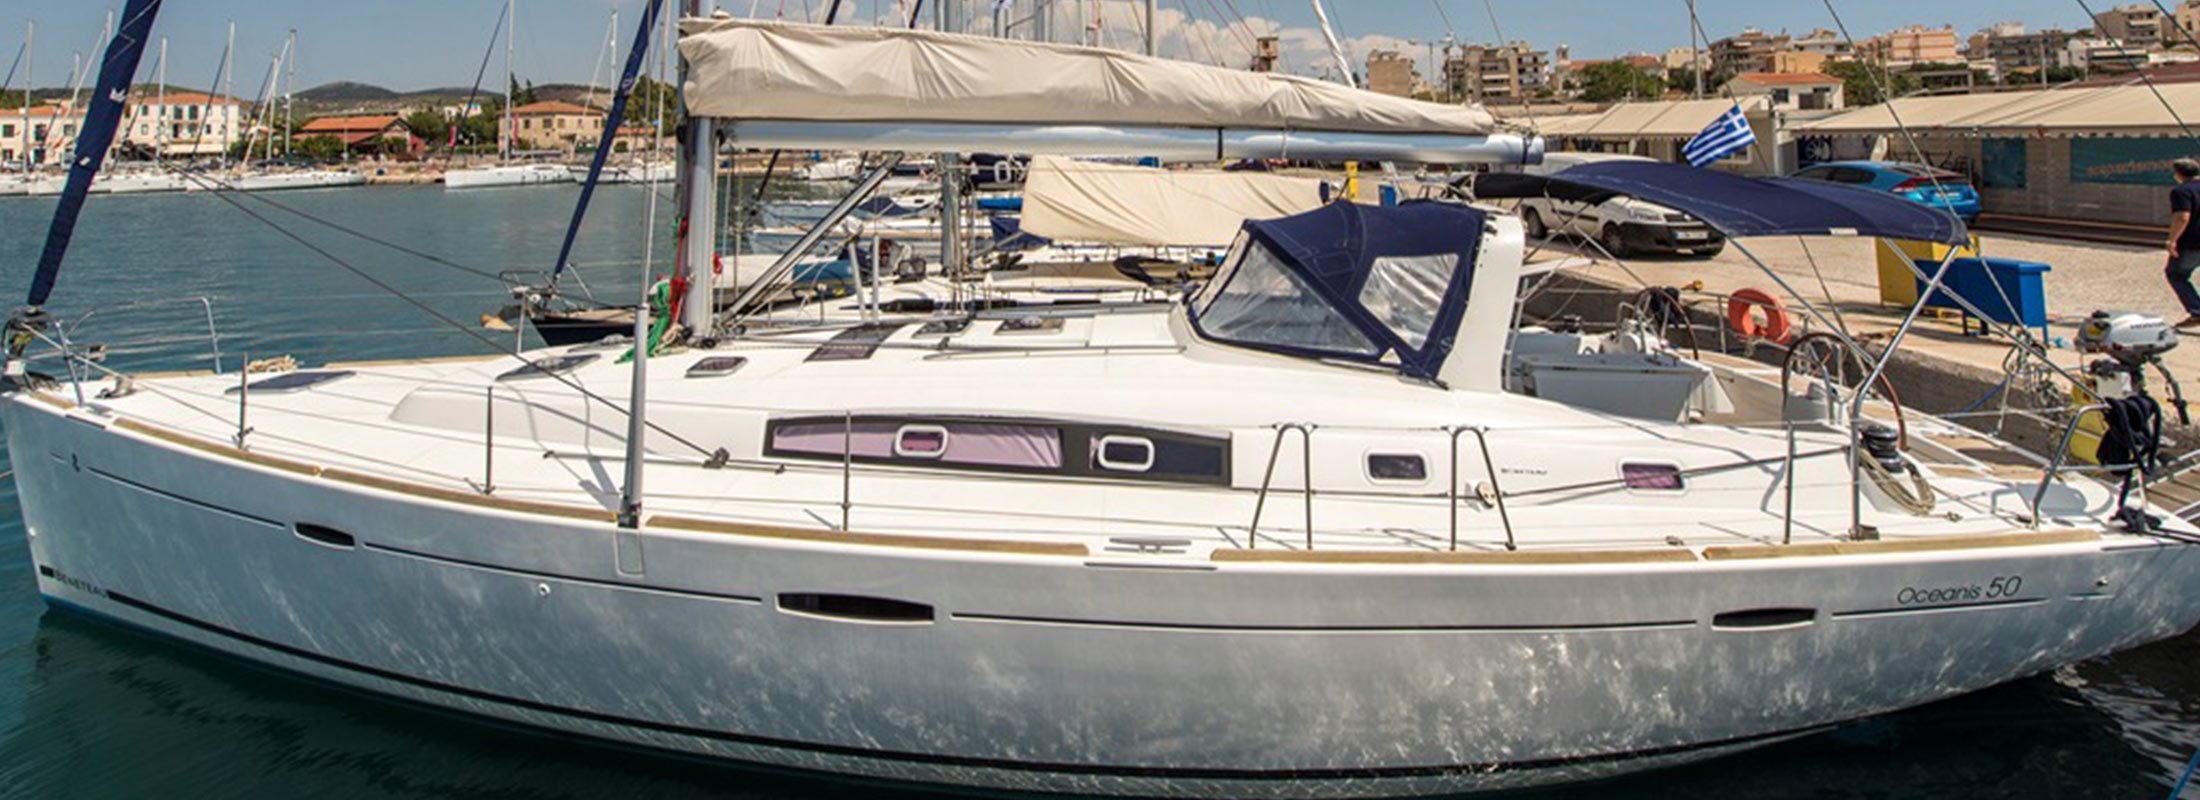 Isabella-sailing-yacht-charter-a-yacht-slider-1.jpg